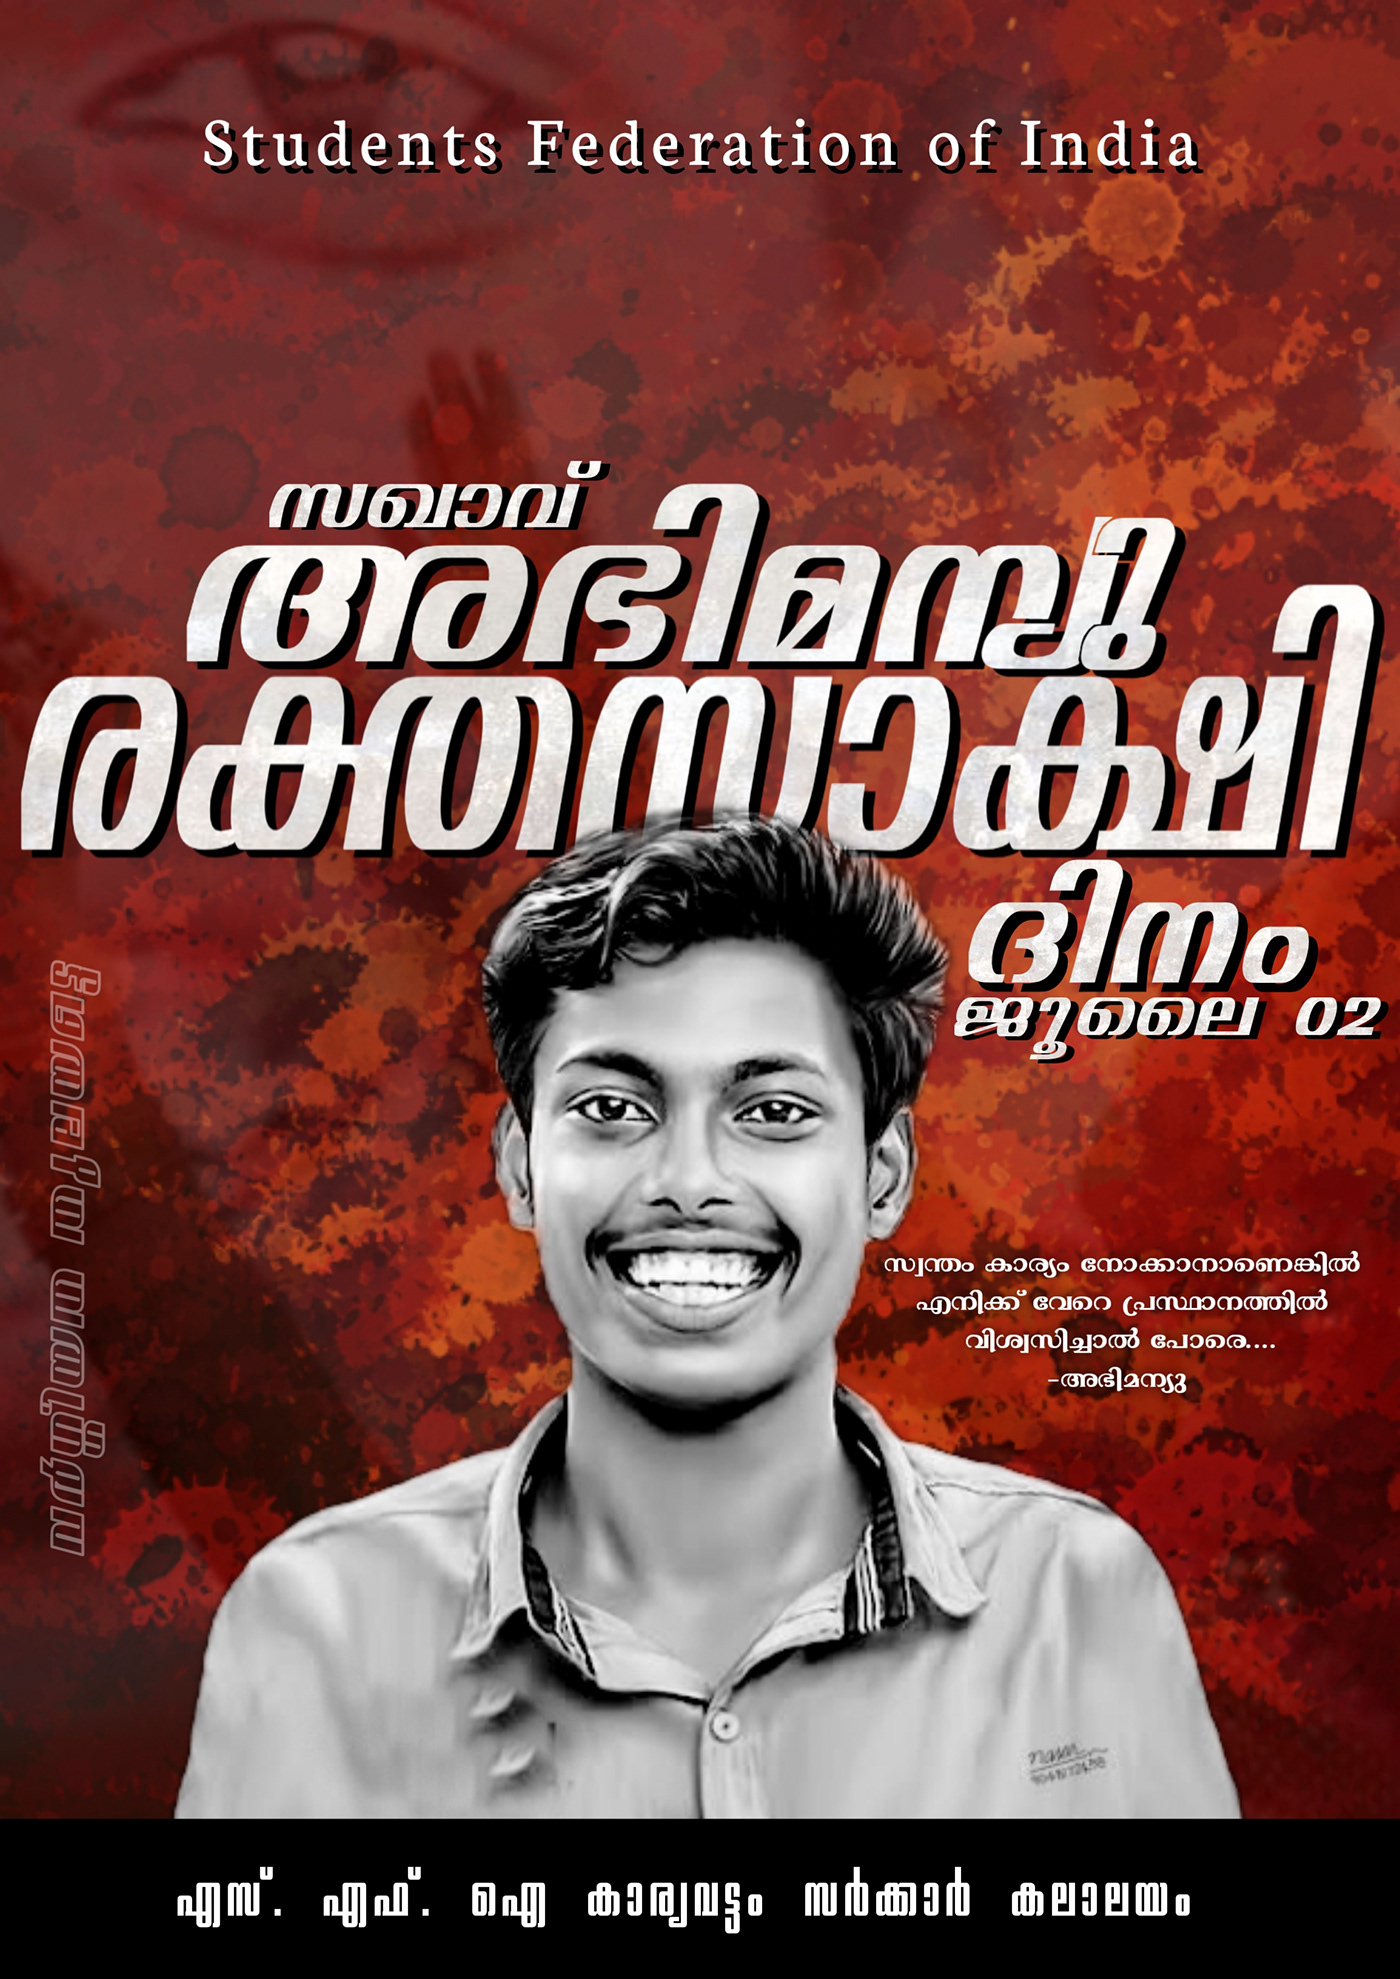 SFI kerala comrade malayalam trivandrum martyr's